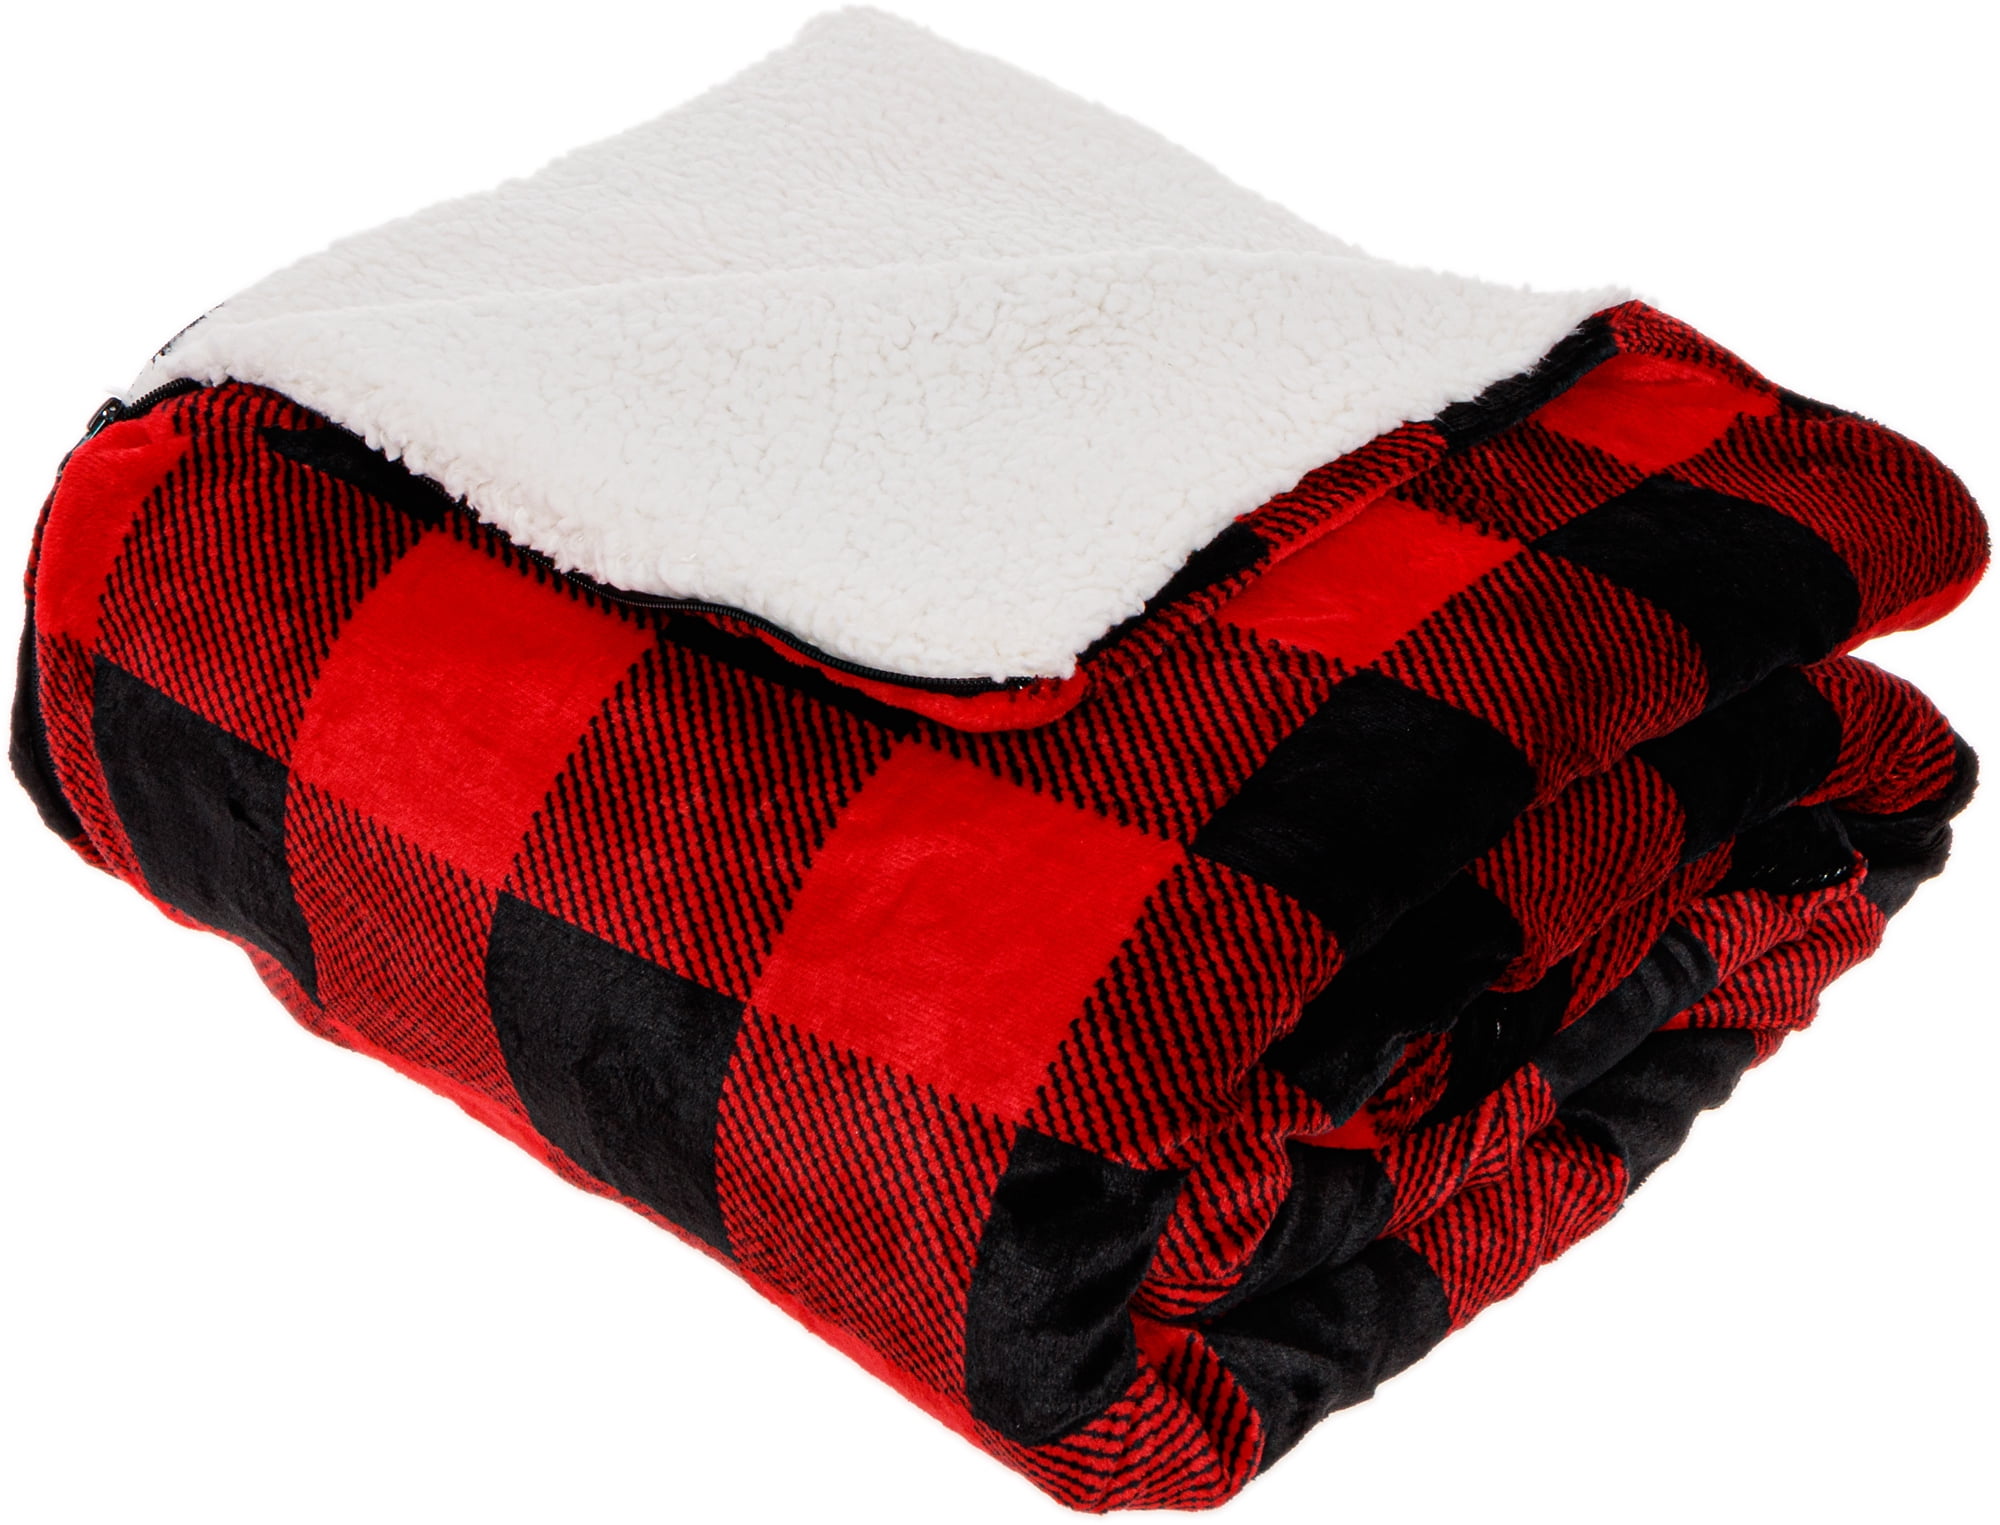 Mindful Design Buffalo Plaid Convertible Sleeping Bag Blanket with ...